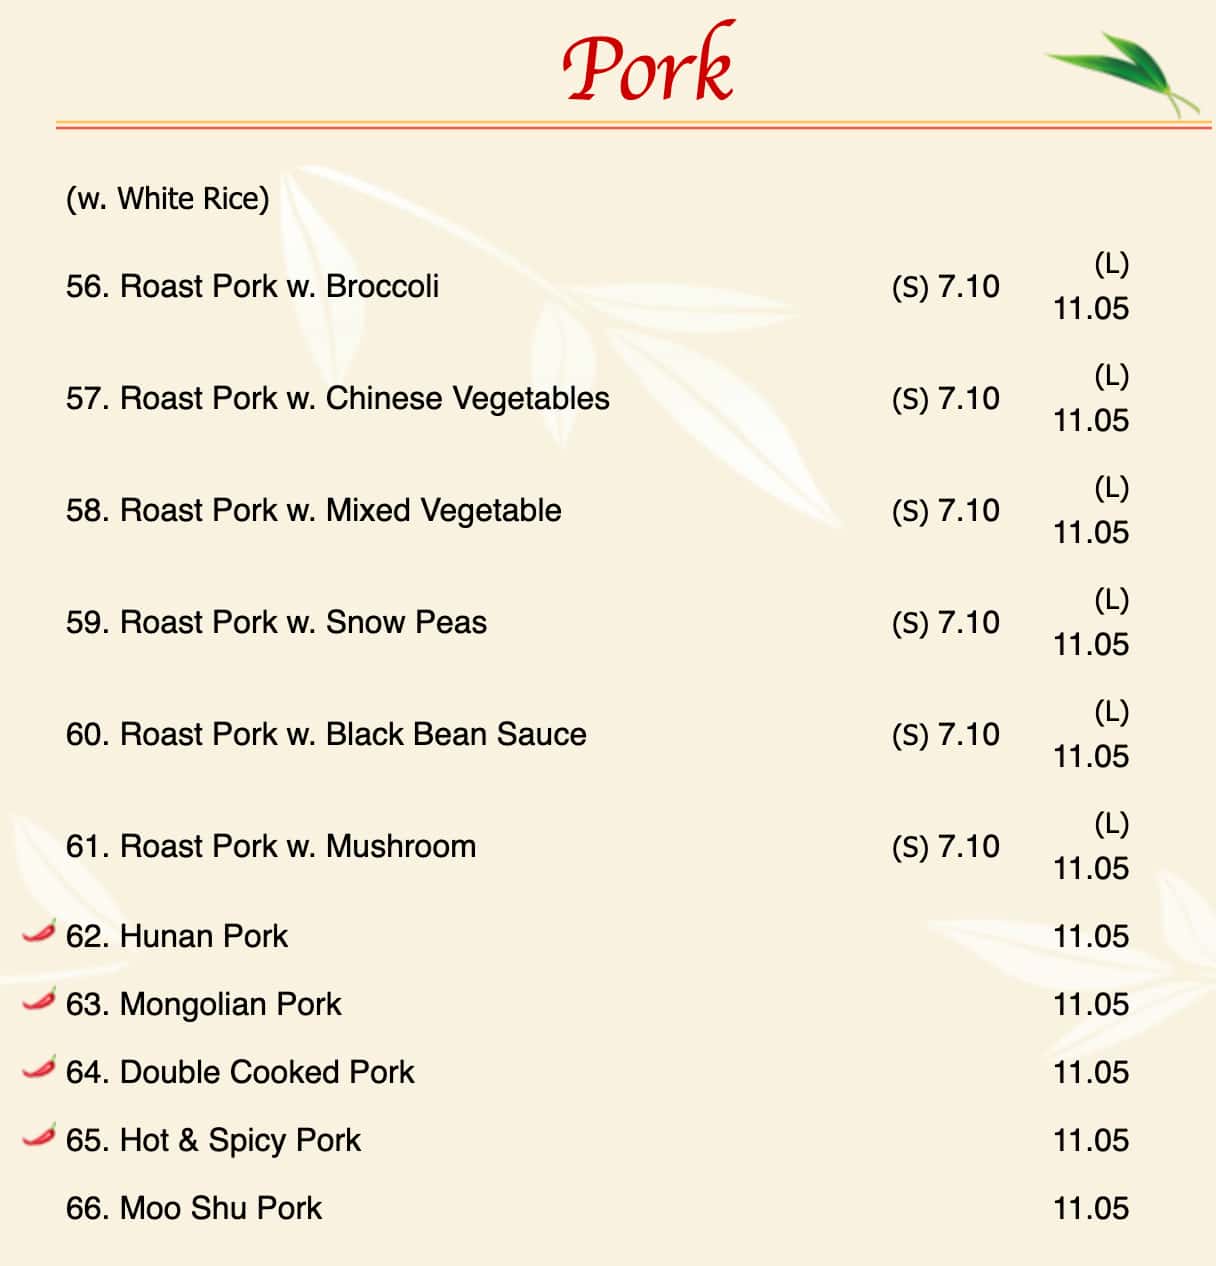 Golden City Chinese Restaurant Pork Menu